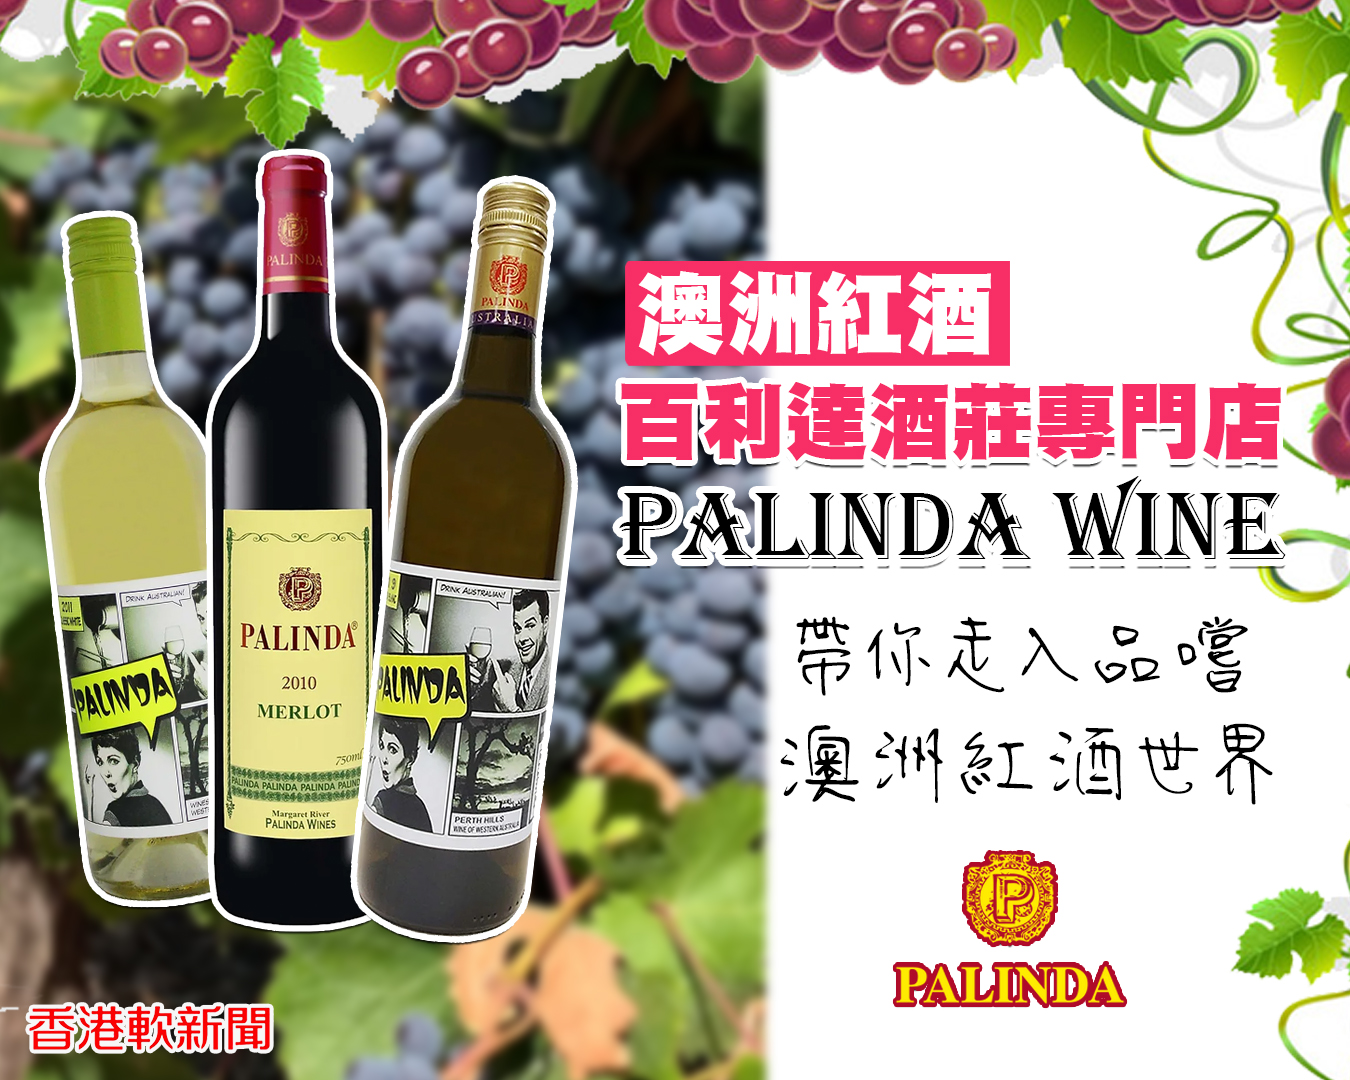 Palinda Wine 百利達 百利達酒莊 澳洲紅酒 澳洲酒